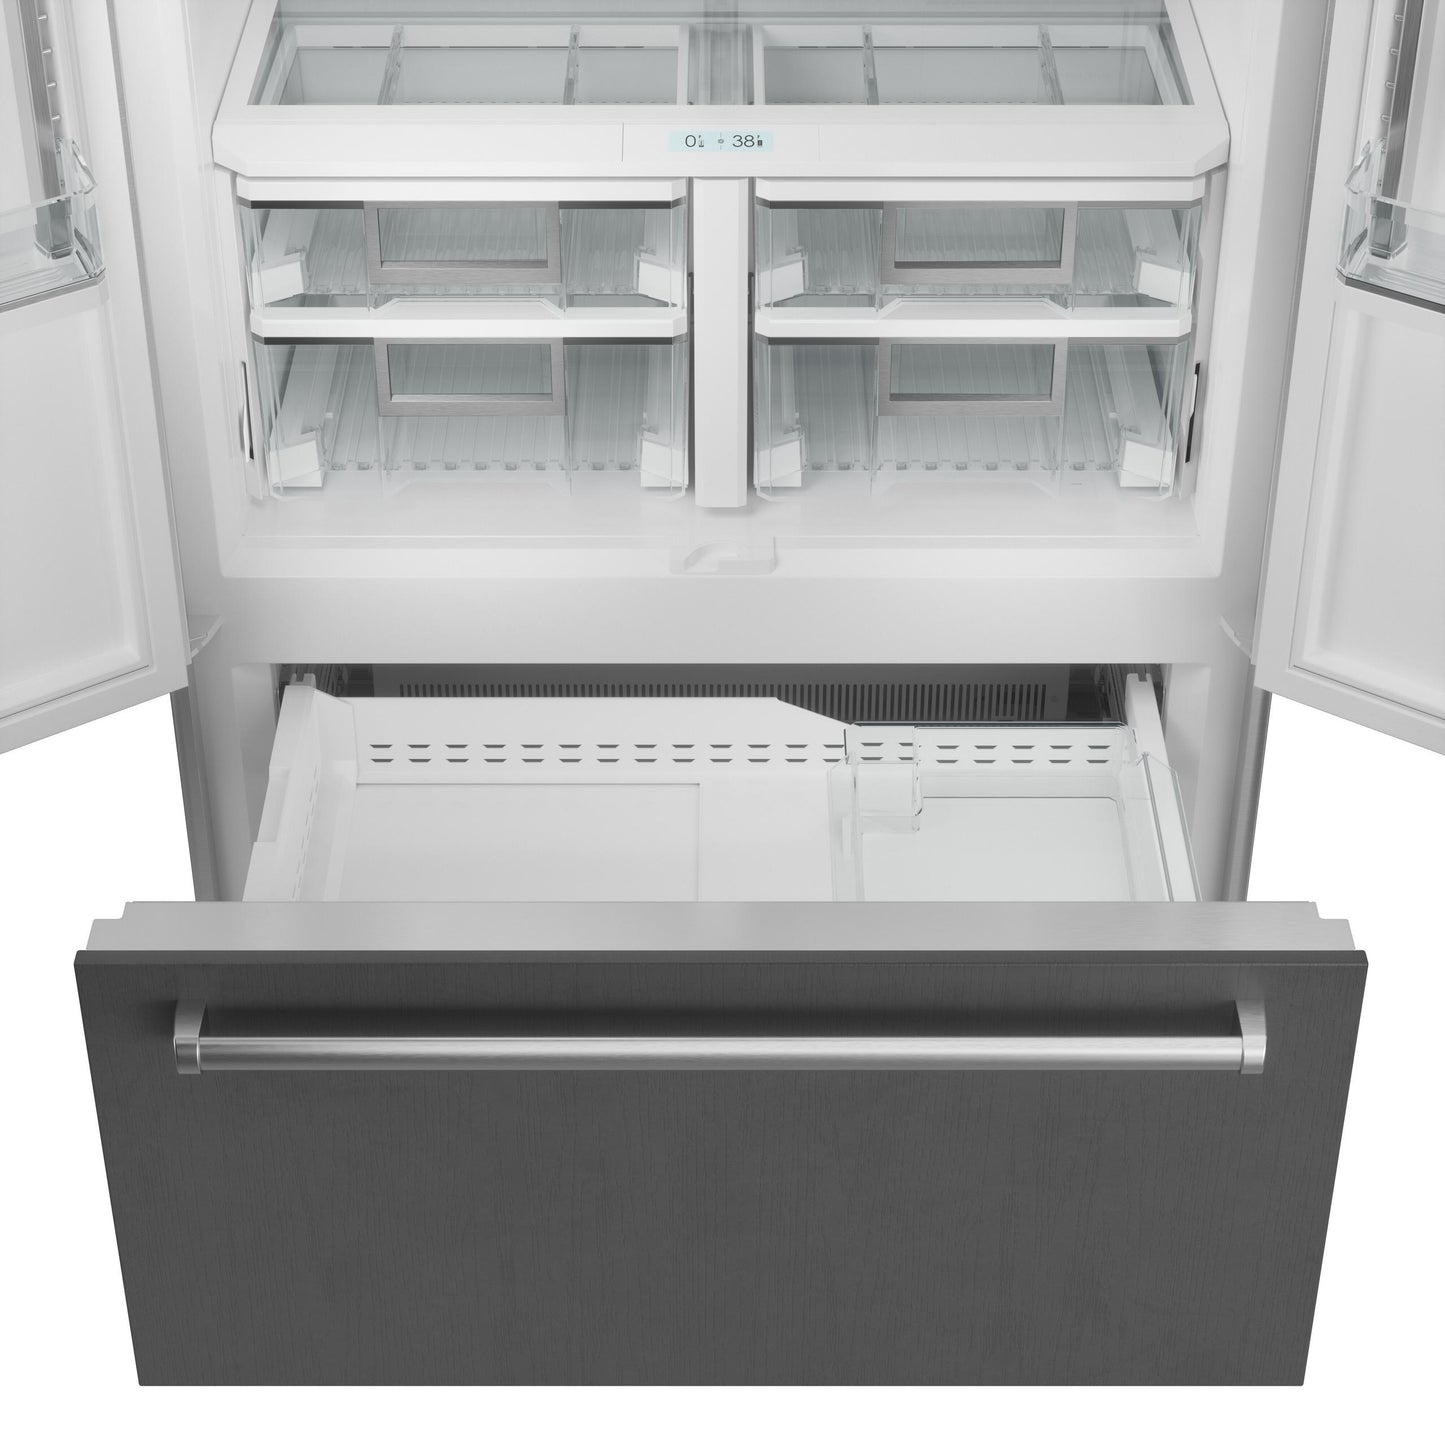 Sub-Zero CL4250UFDO 42" Classic French Door Refrigerator/Freezer - Panel Ready